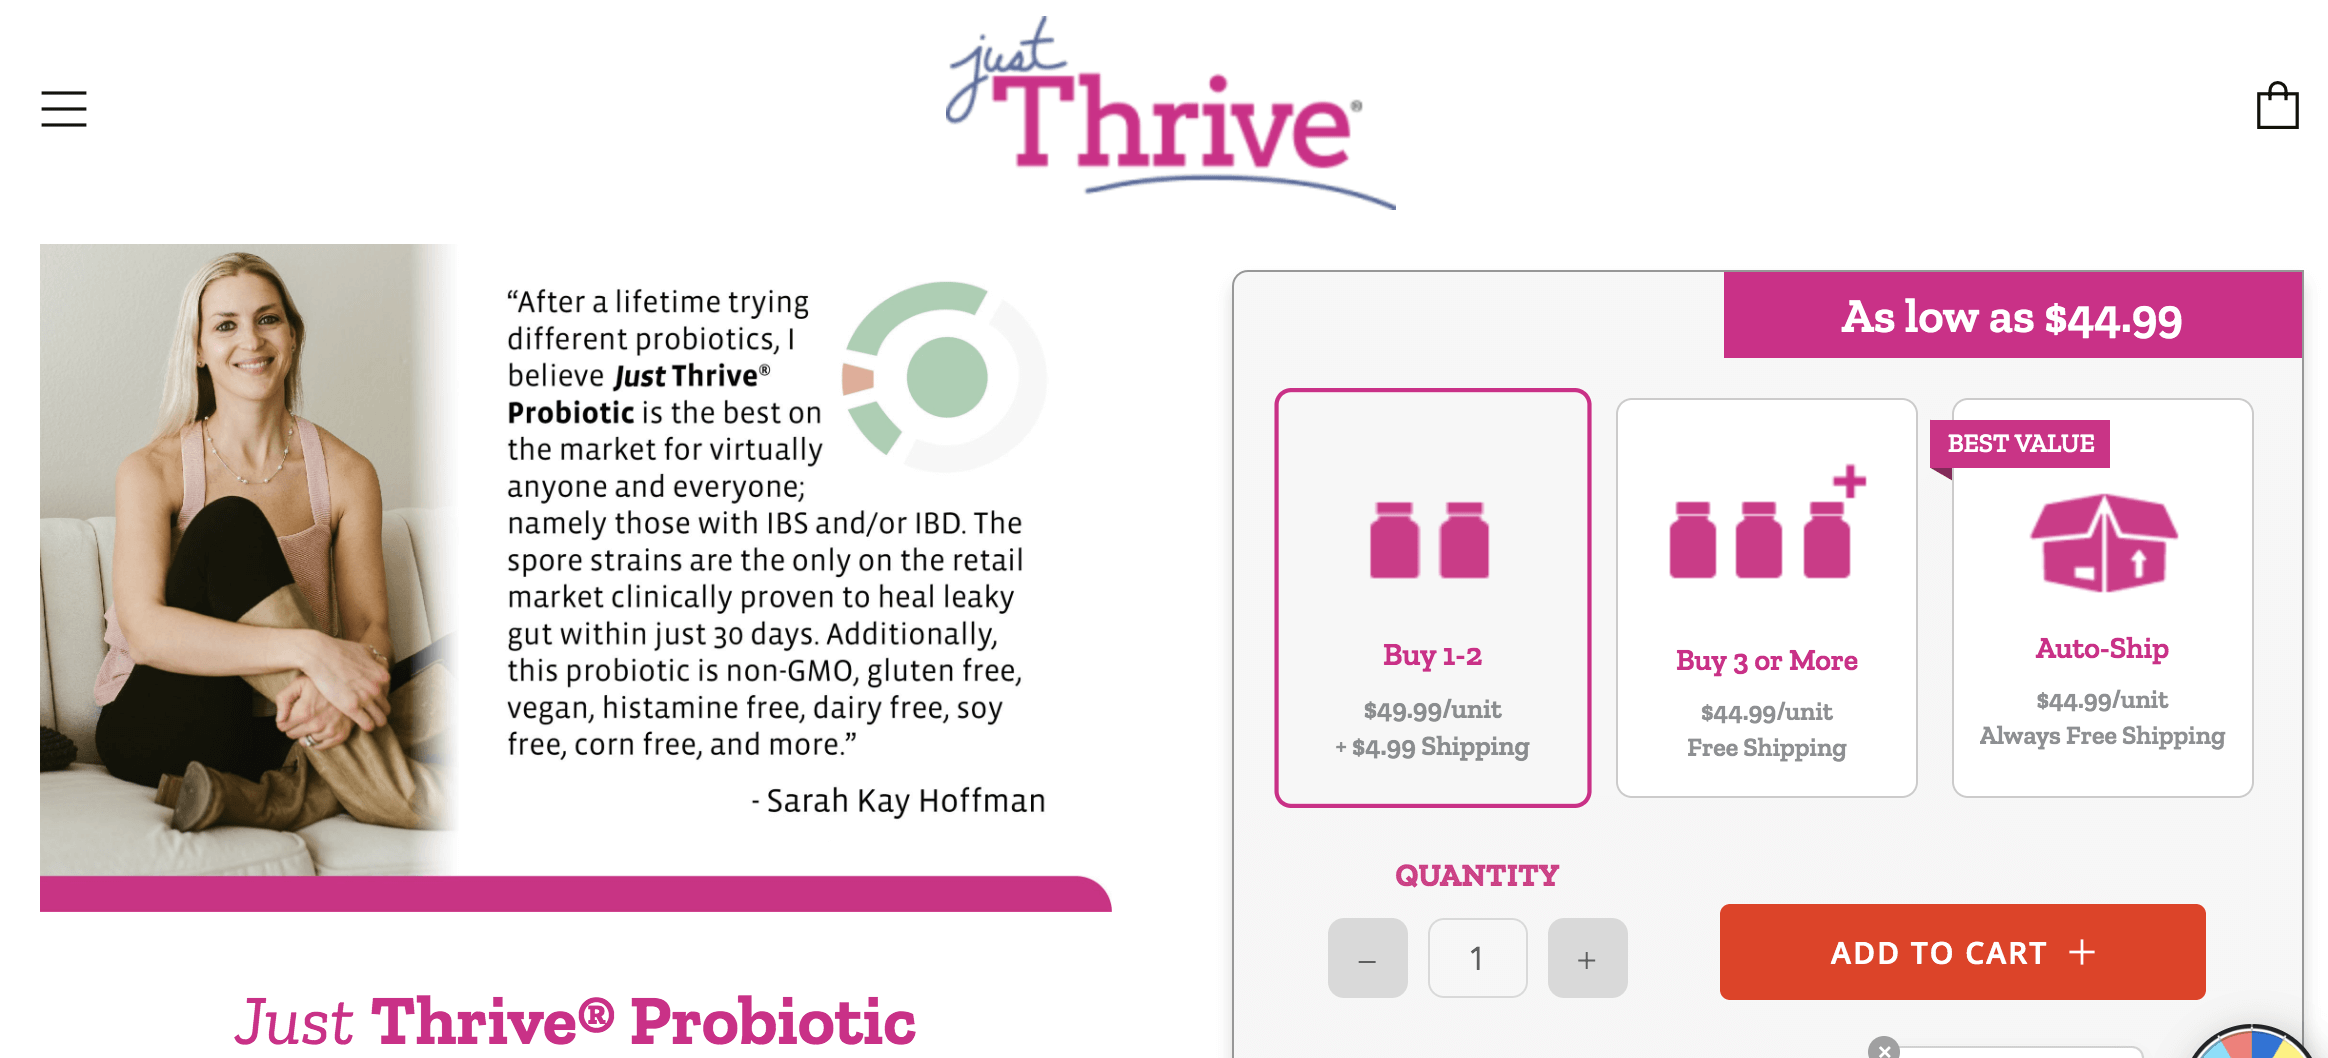 Just Thrive Probiotic benefits agutsygirl.com #probiotics #supplements #guthealth A Gutsy girl